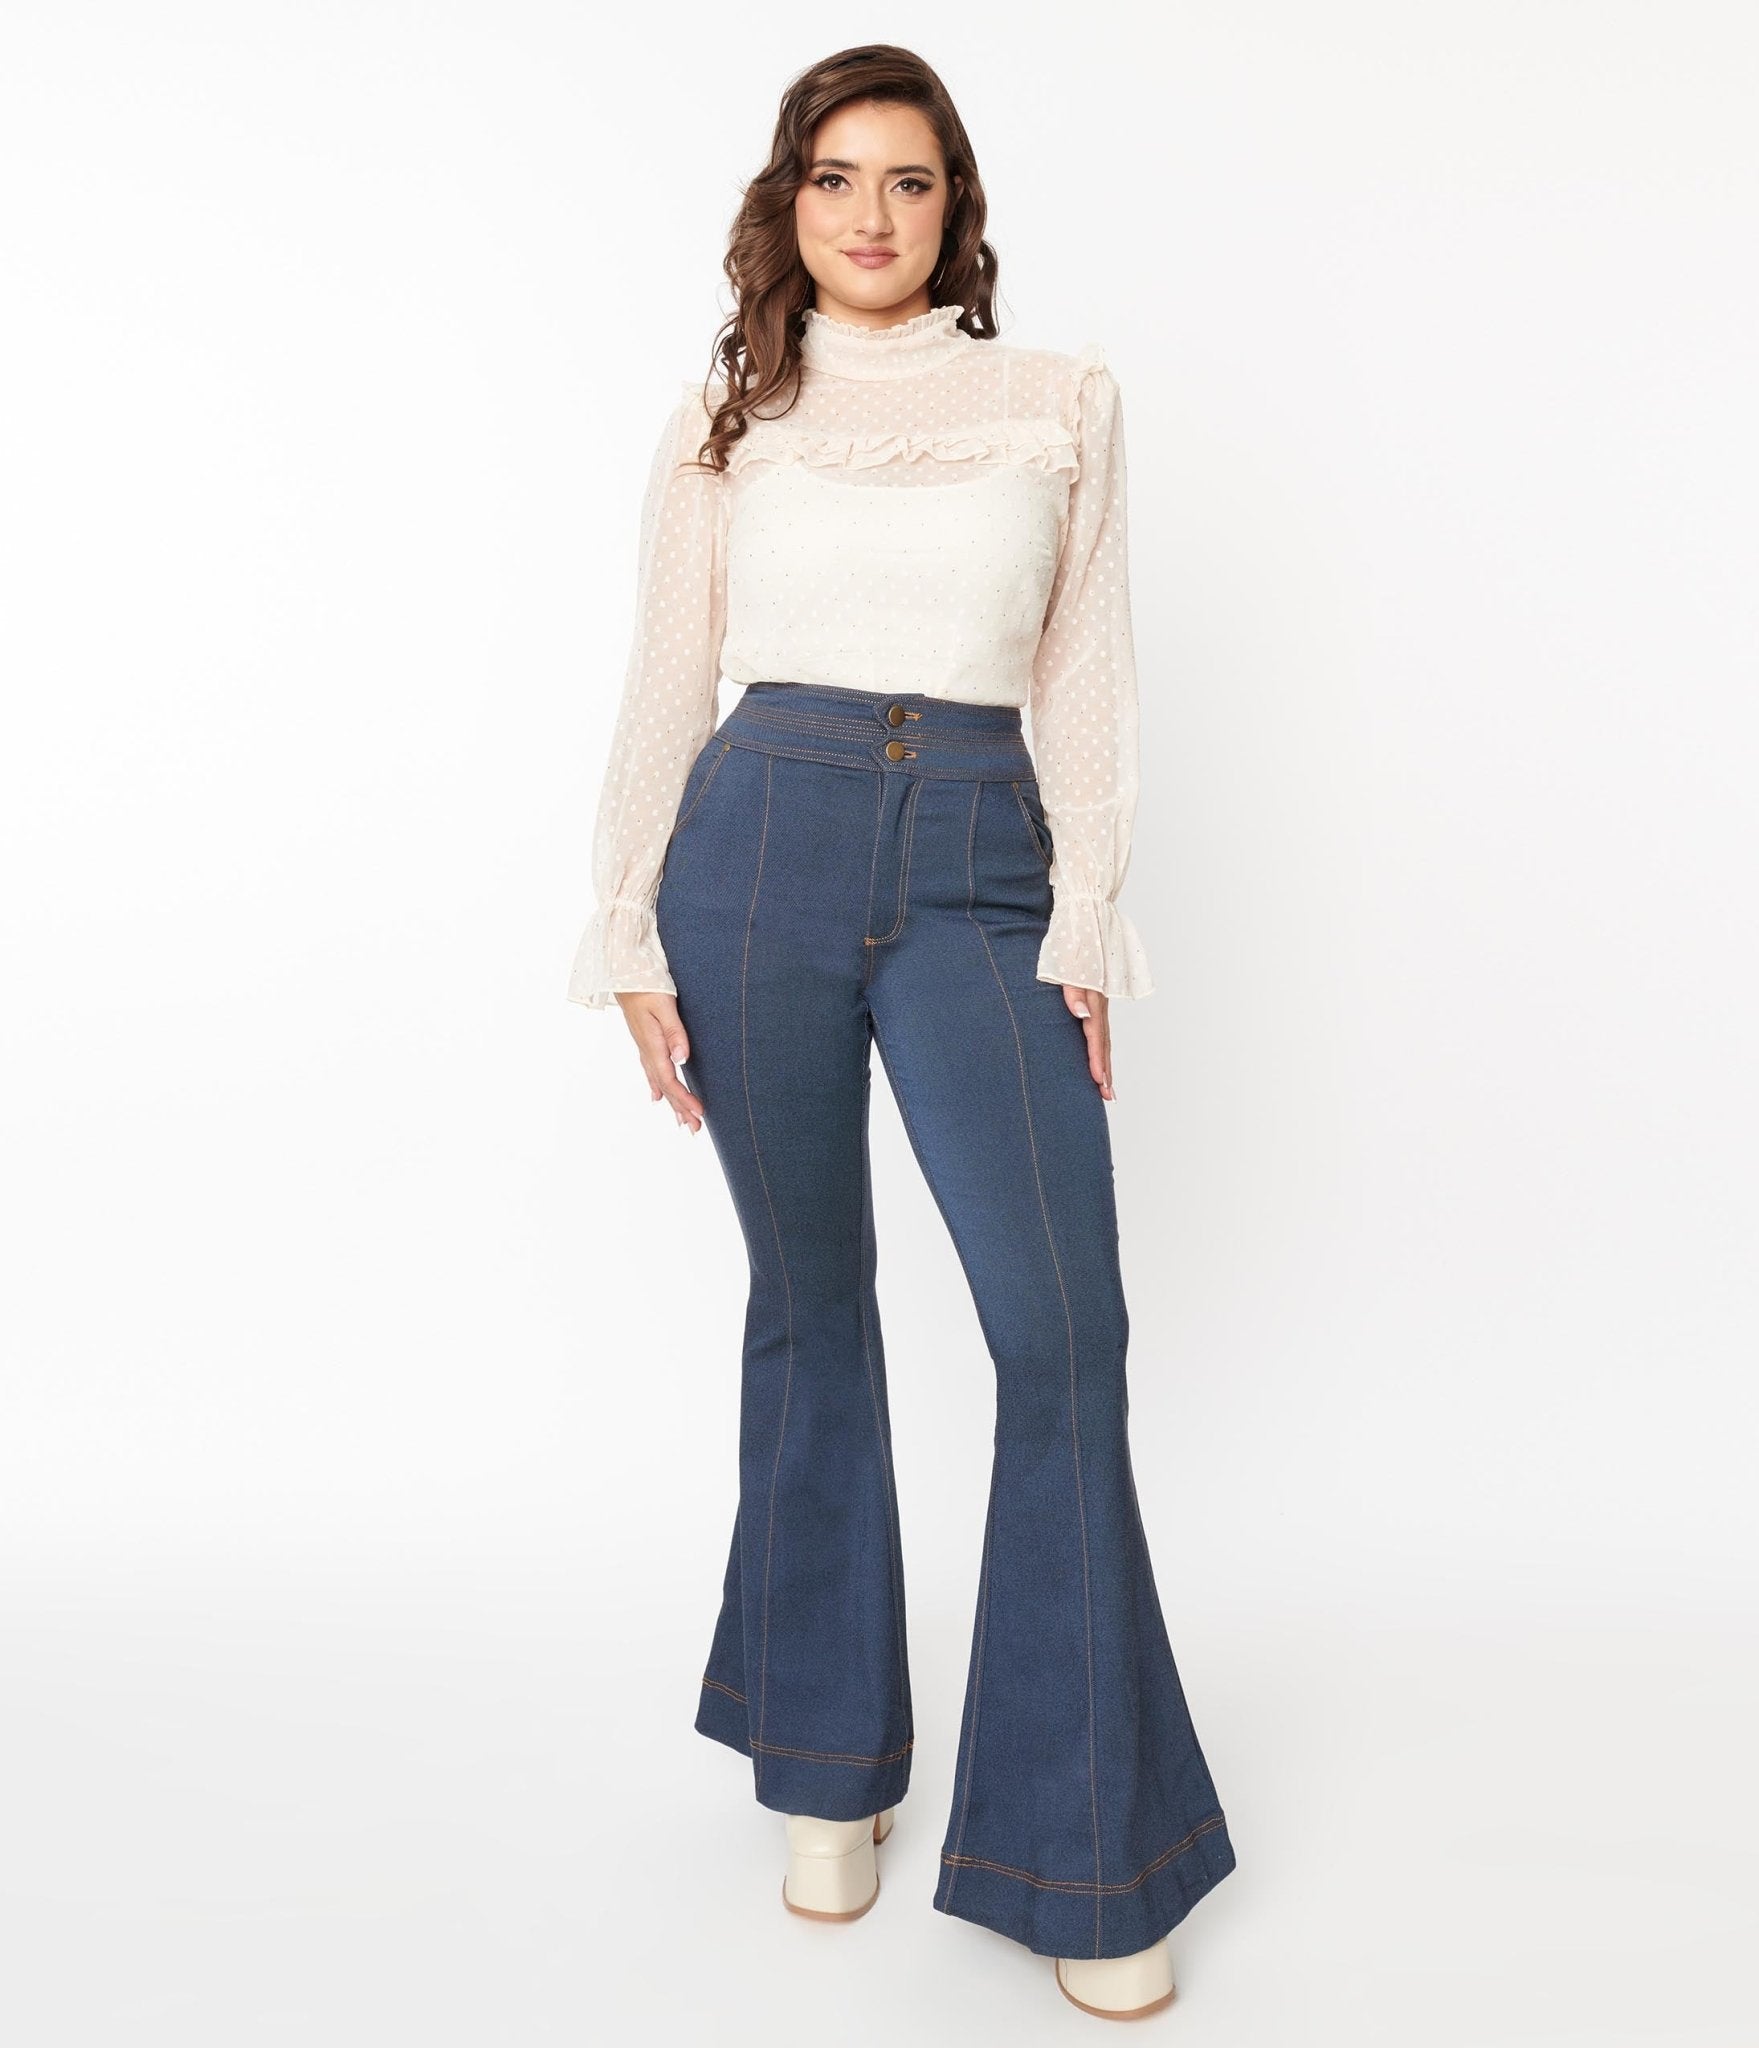 Coduop Women High Waist Skinny Jeans Aesthetic Vintage Flare Jeans Bell  Bottom Denim Jeans